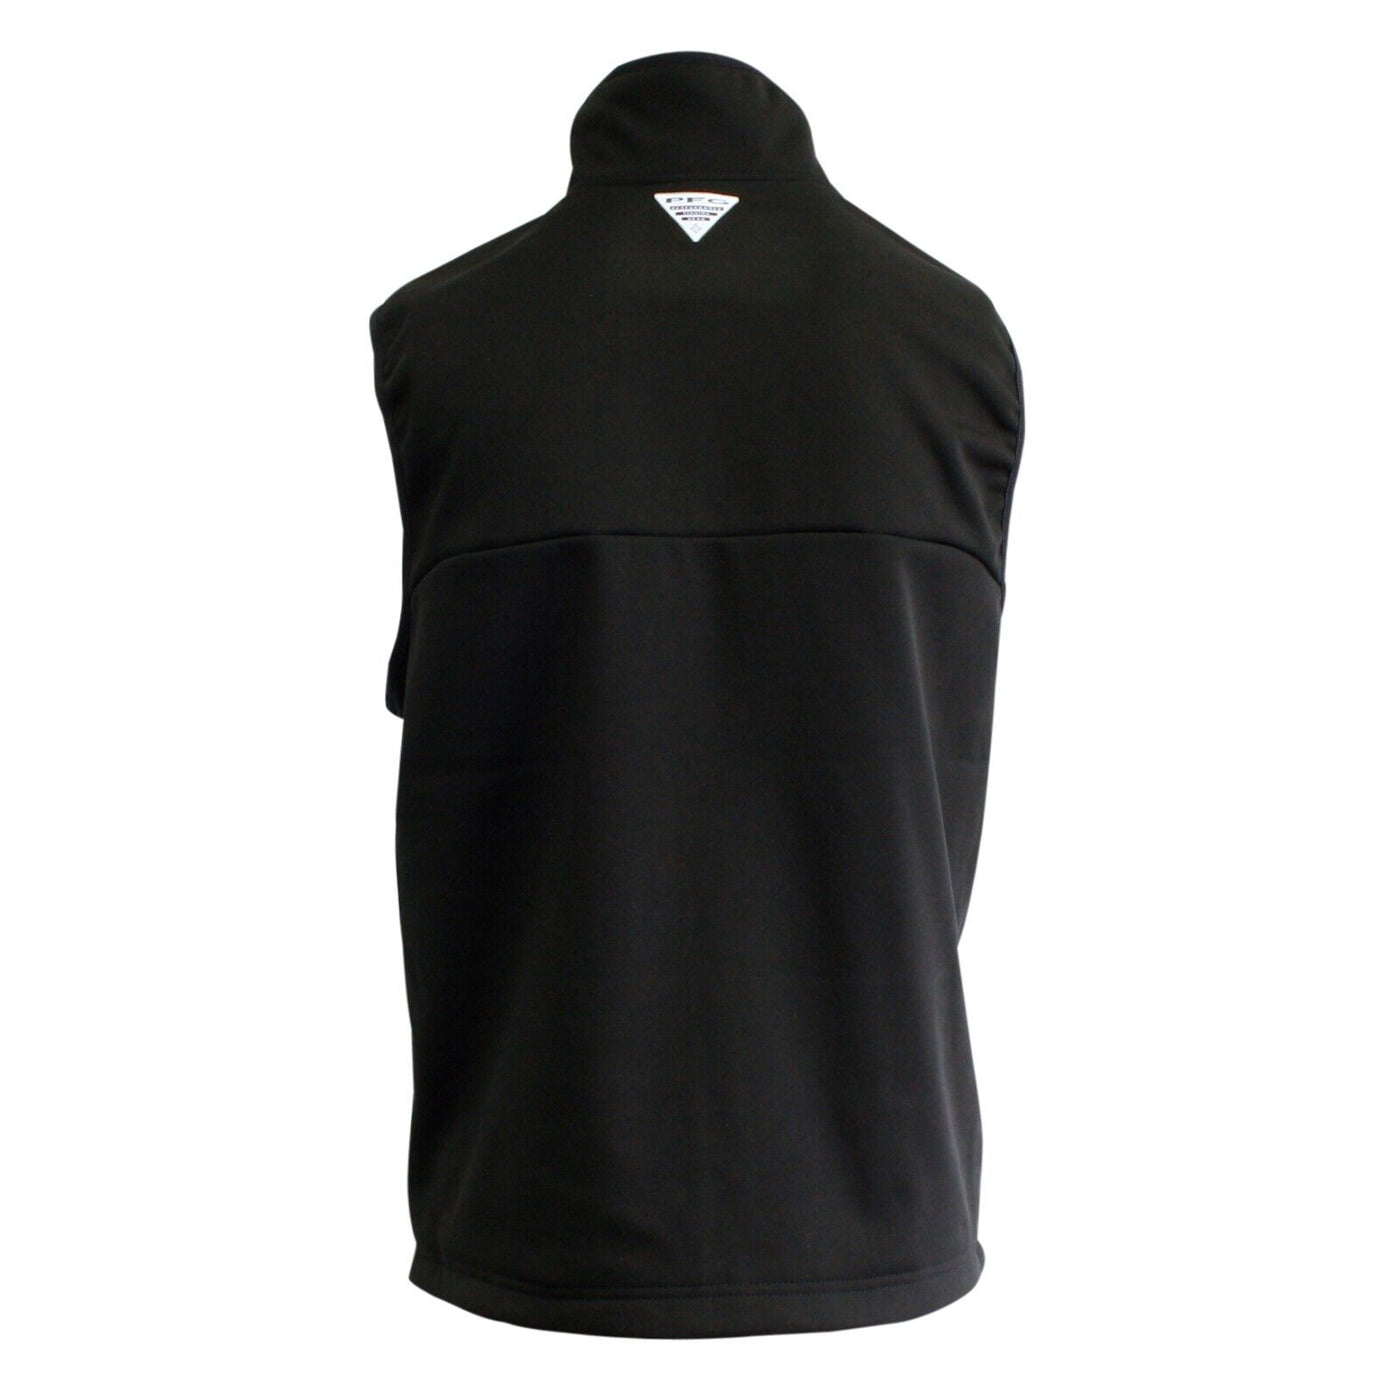 Columbia Men's Black PFG Terminal Stretch Softshell Full Zip Vest